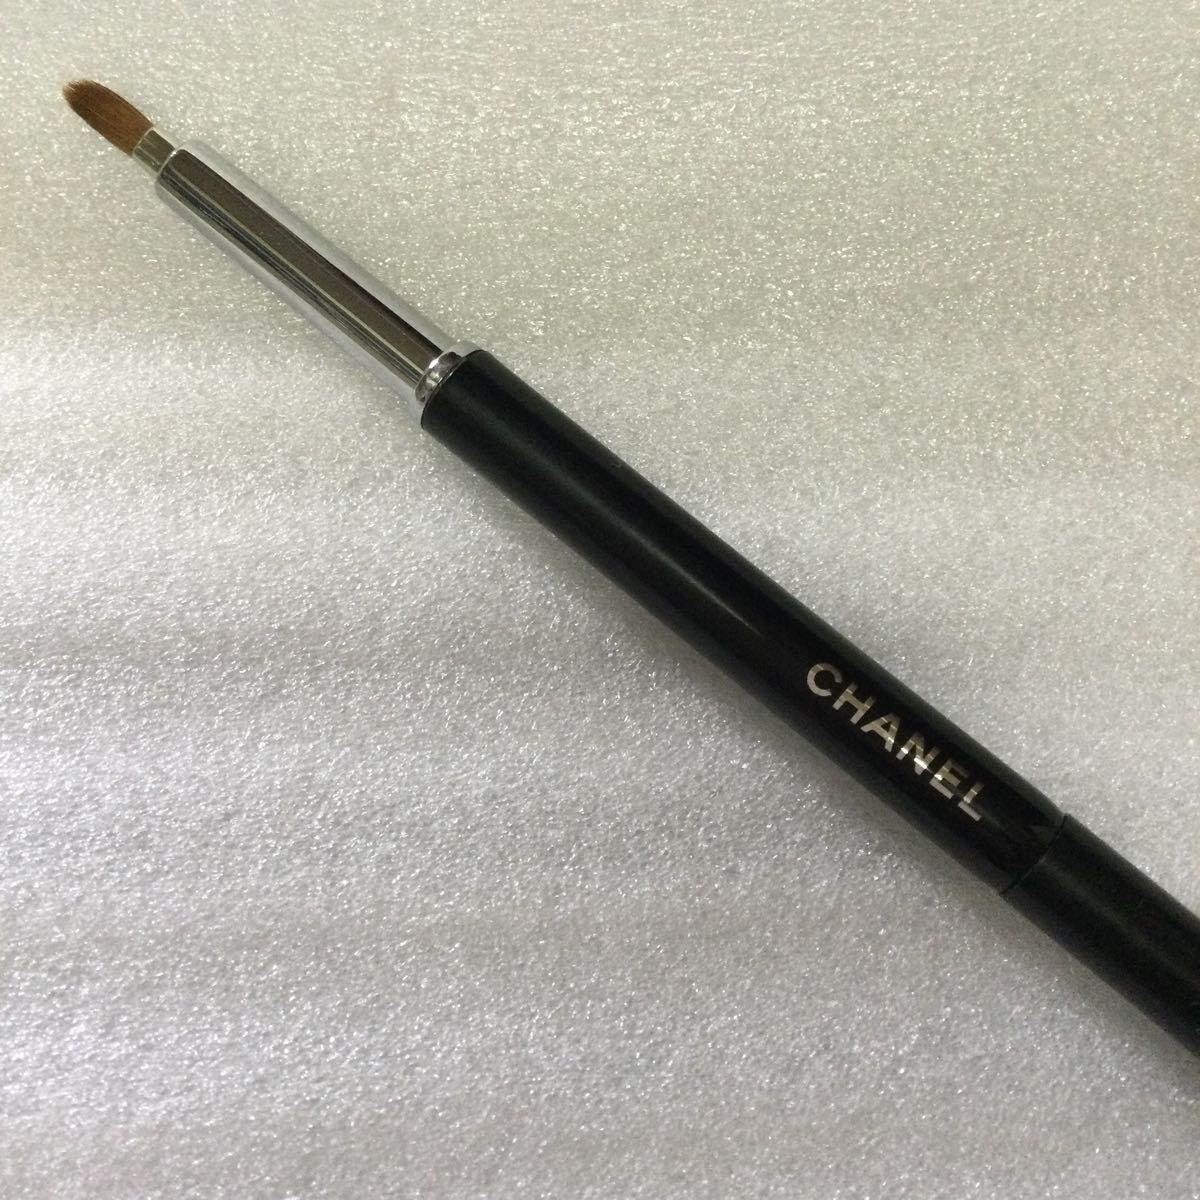  Chanel lip brush use item 